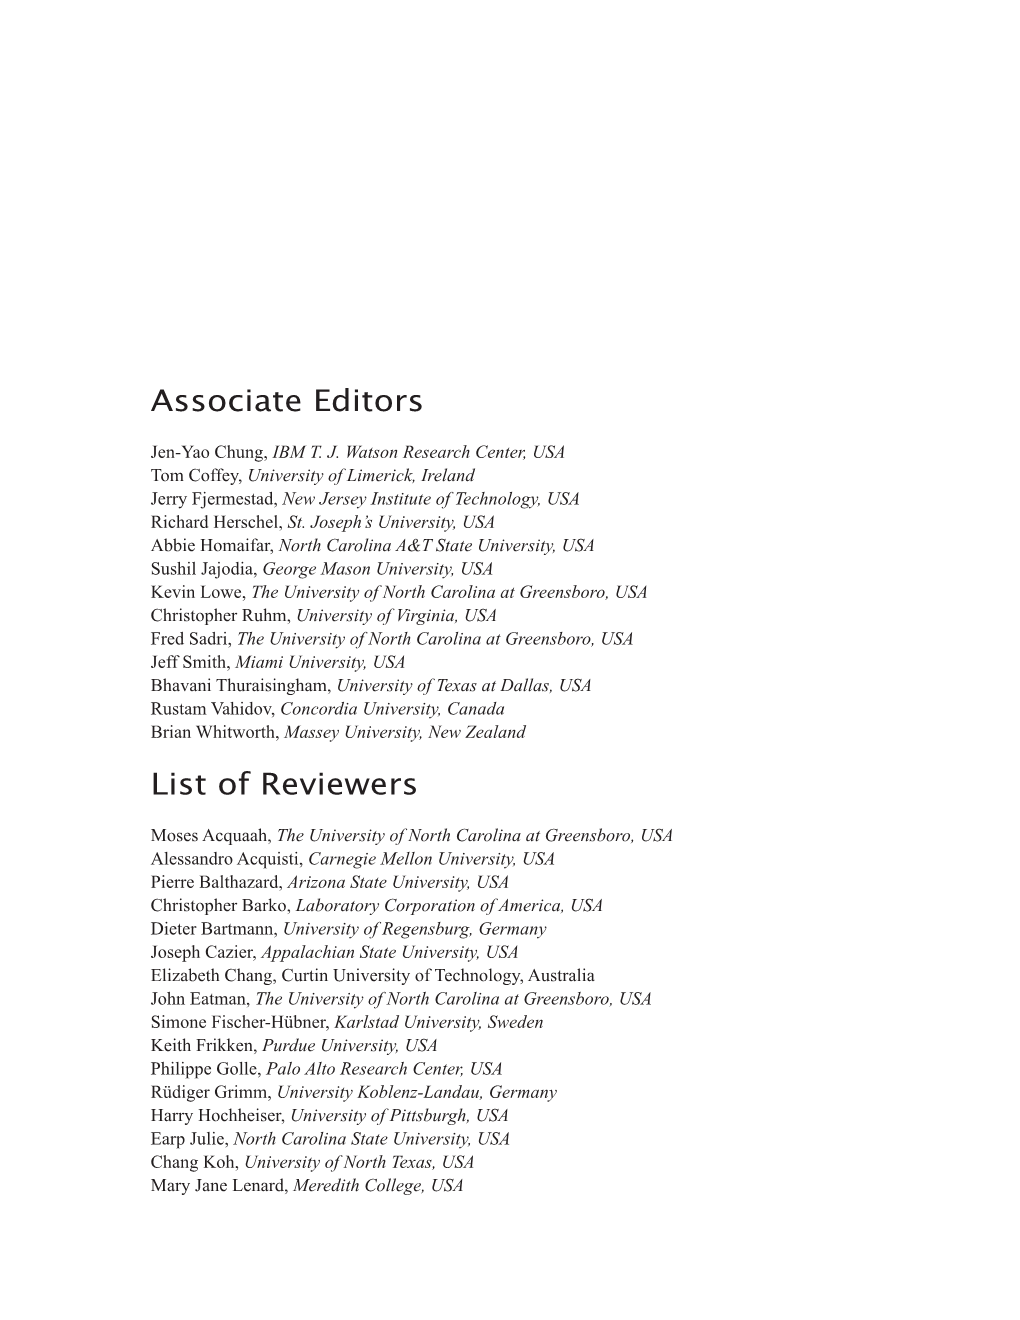 Associate Editors List of Reviewers